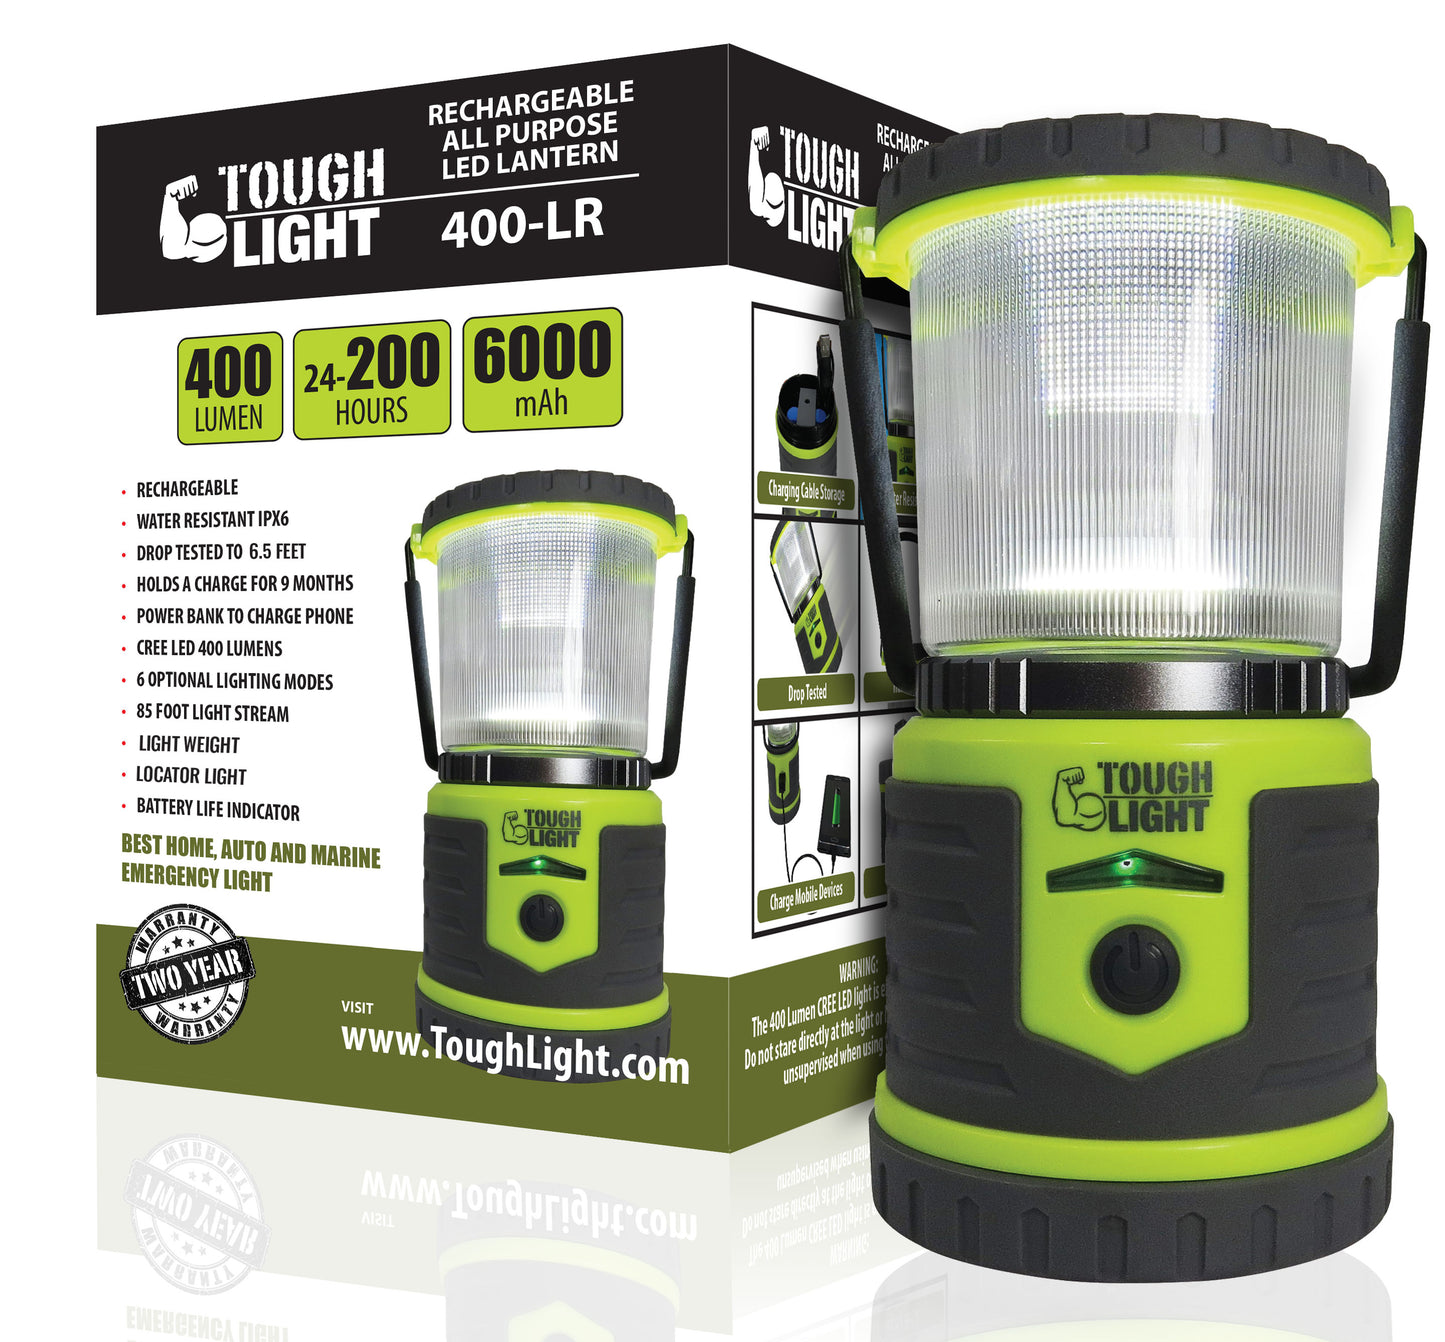 Tough Light 400-LR Rechargeable LED Lantern (Yellow)